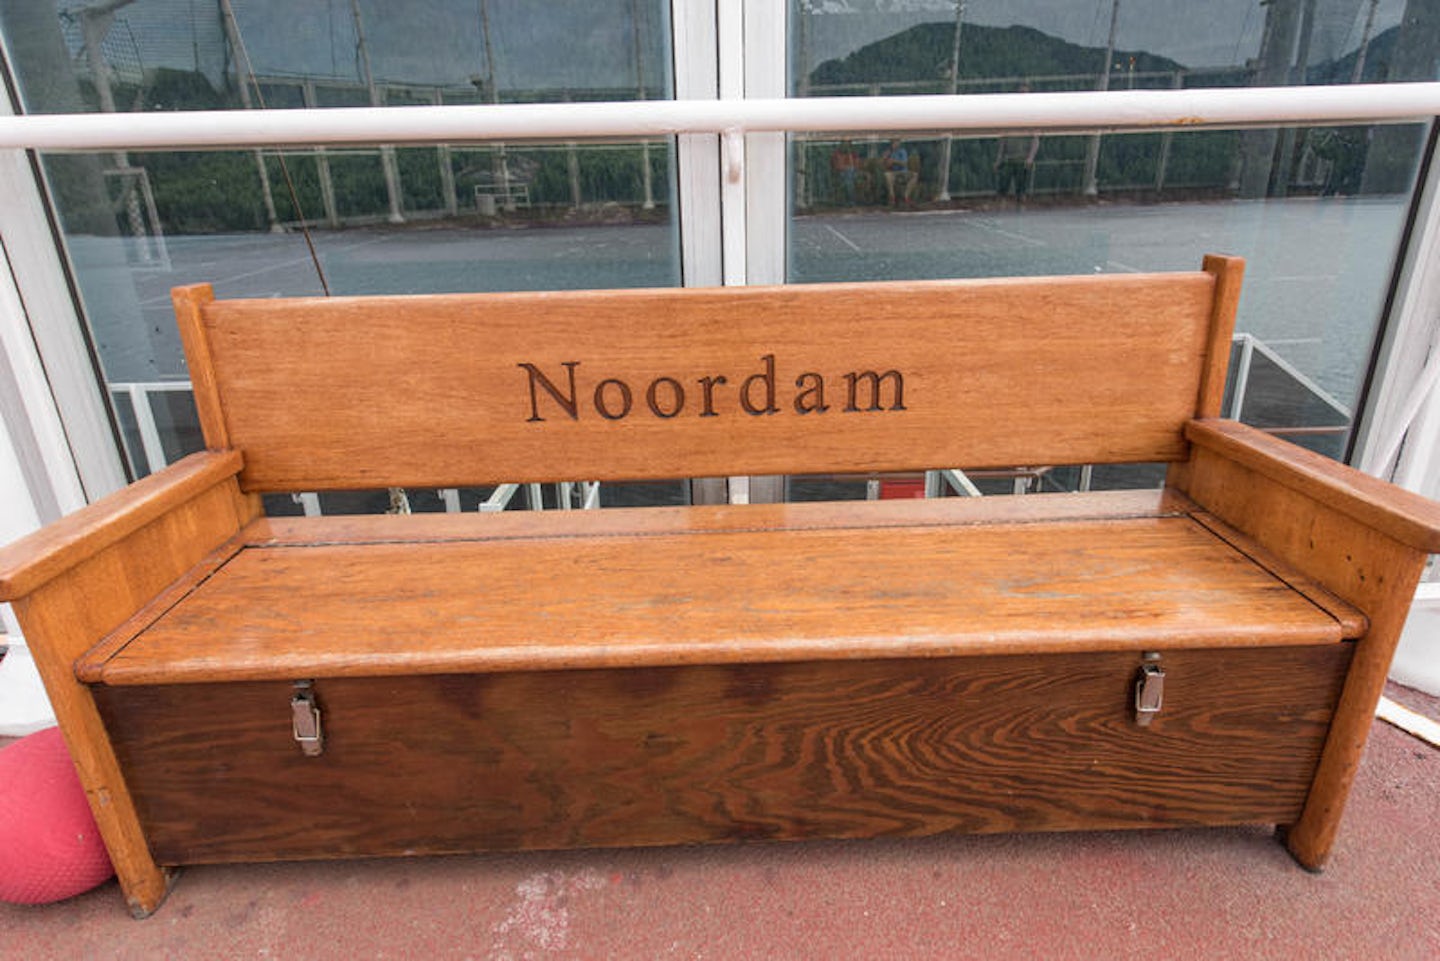 Sports Areas on Noordam